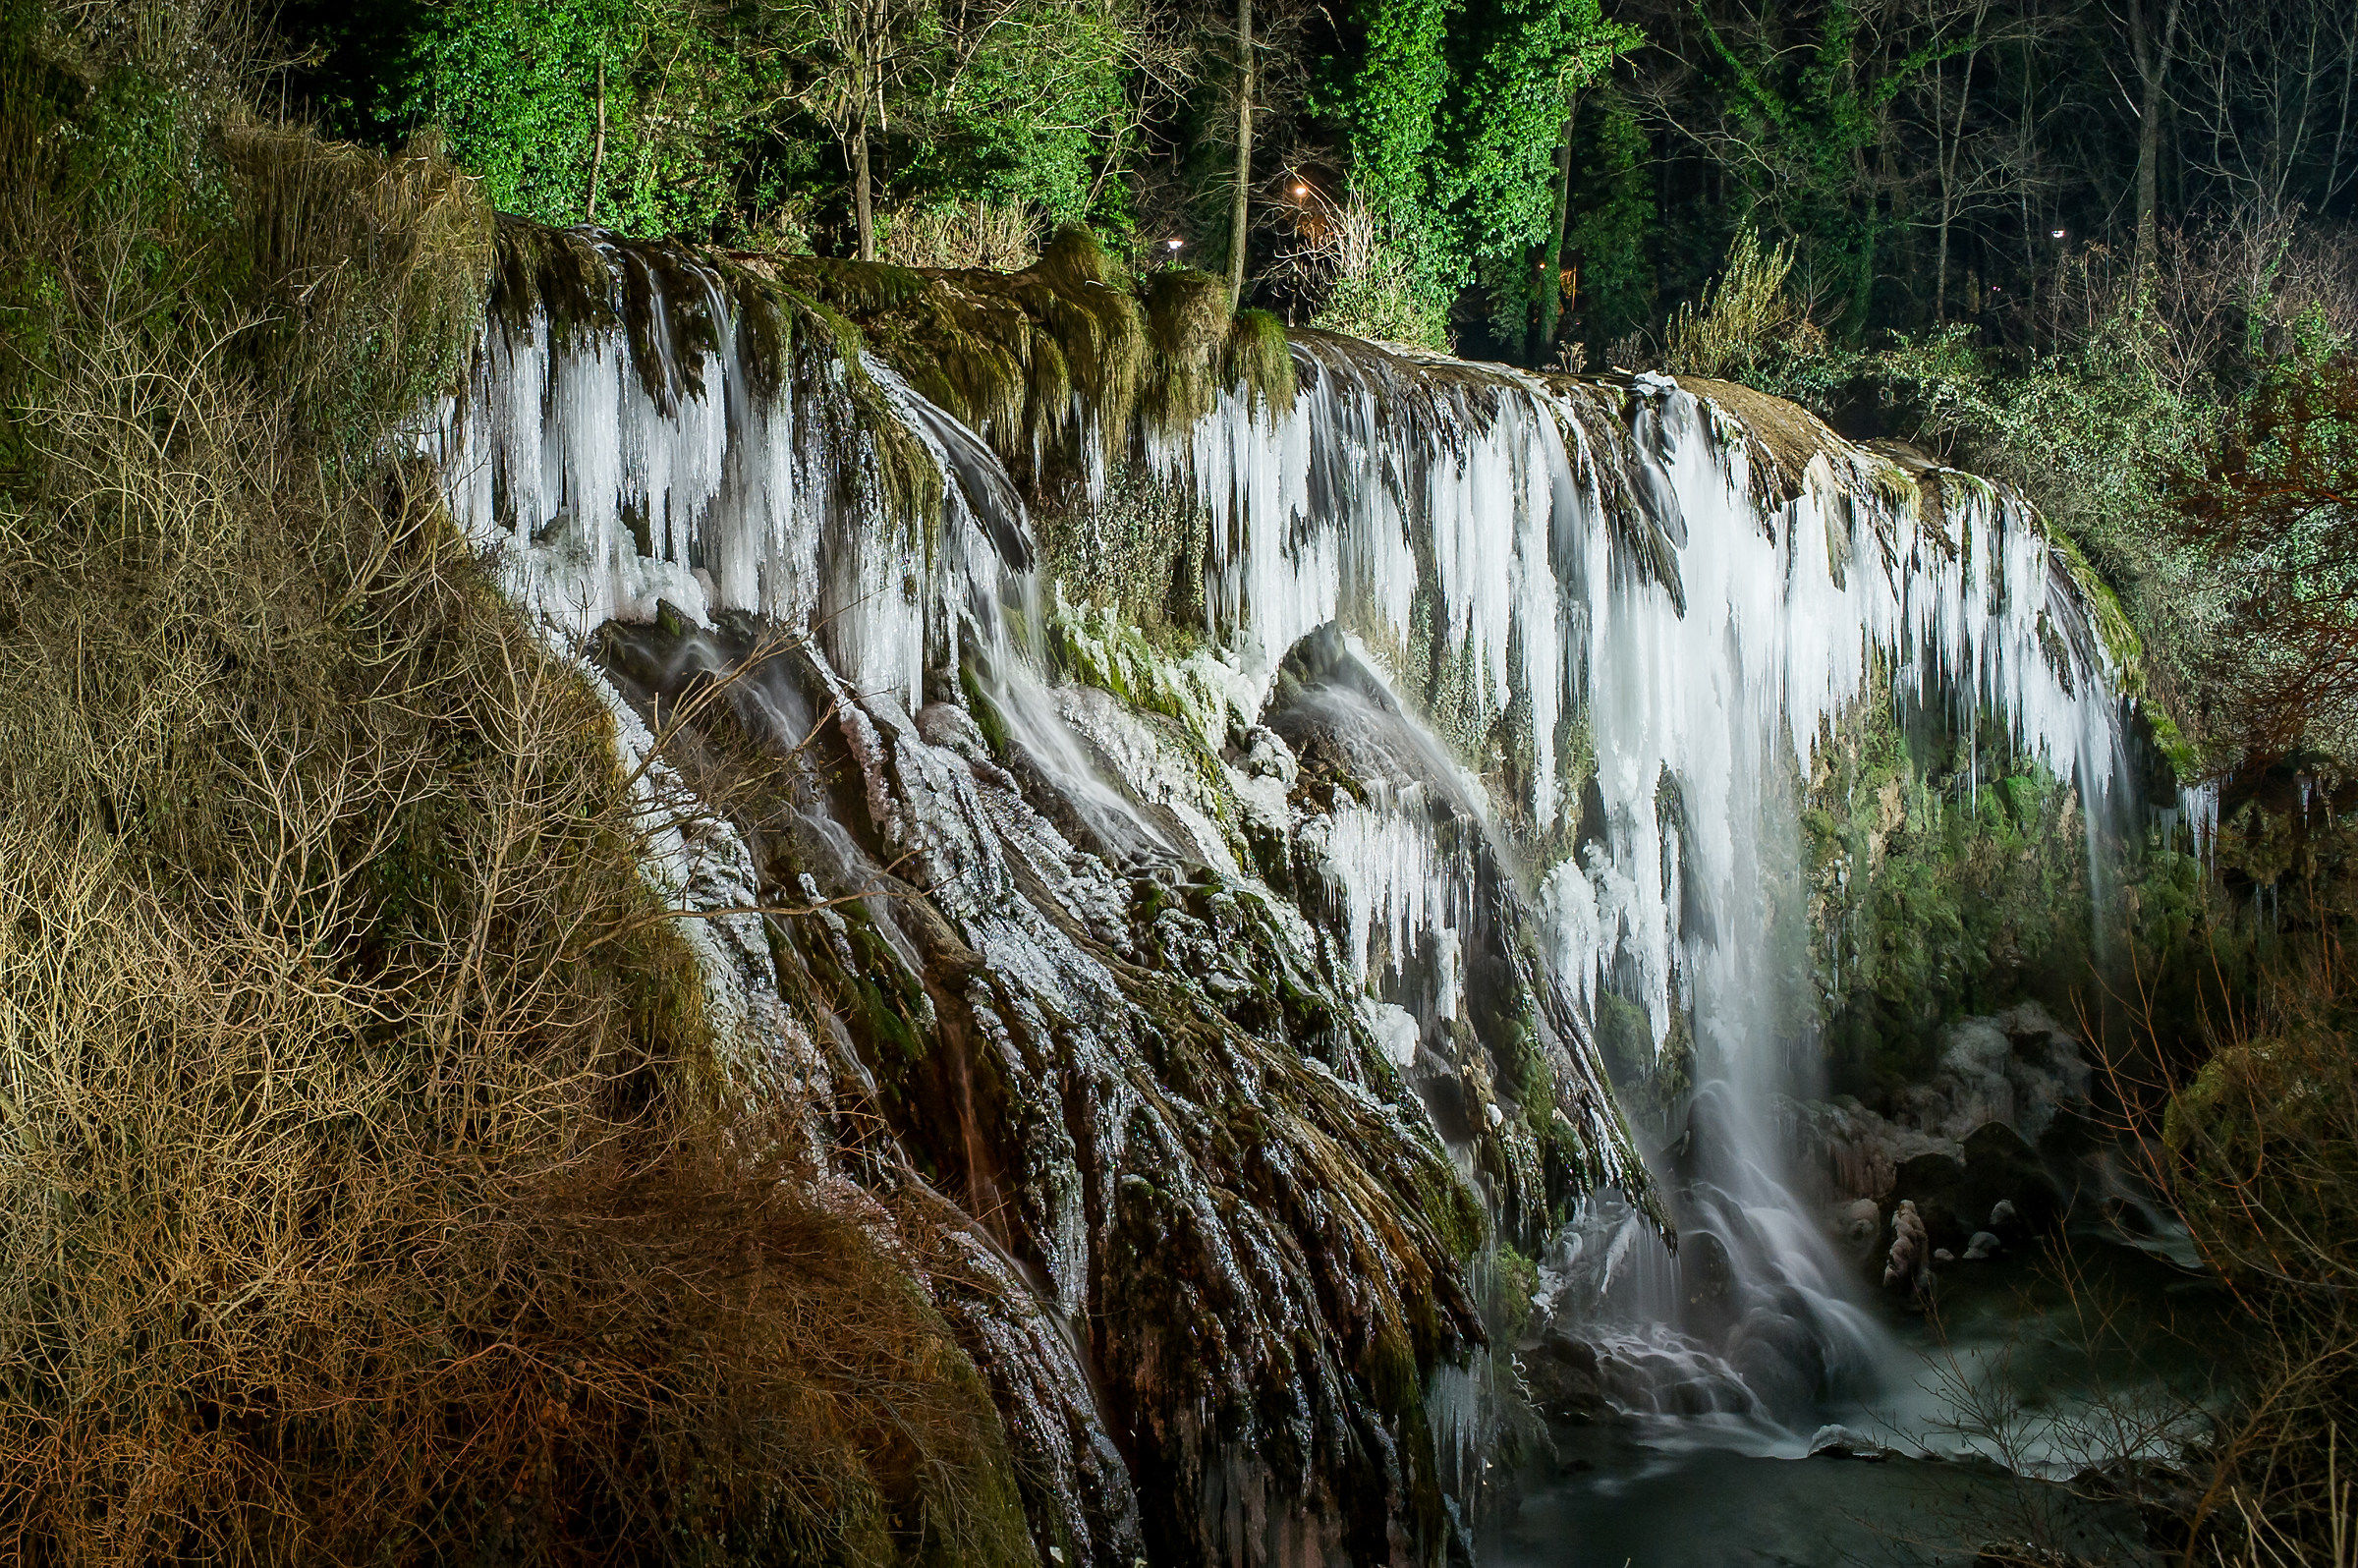 The frozen waterfall...